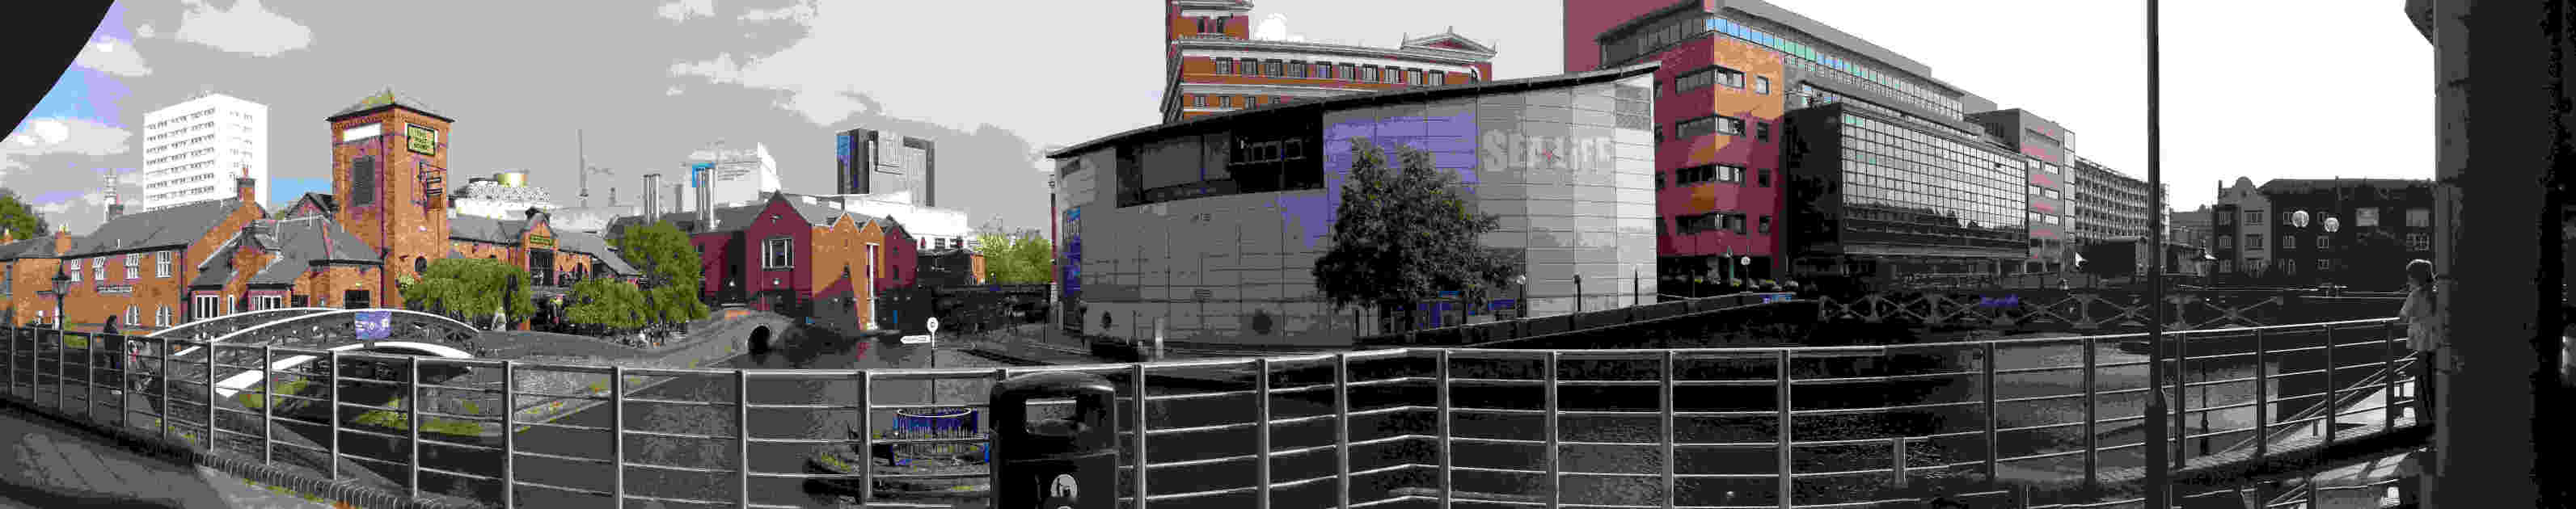 ImagesBirmingham/Birmingham Canal Sealife Centre Panorama.jpg